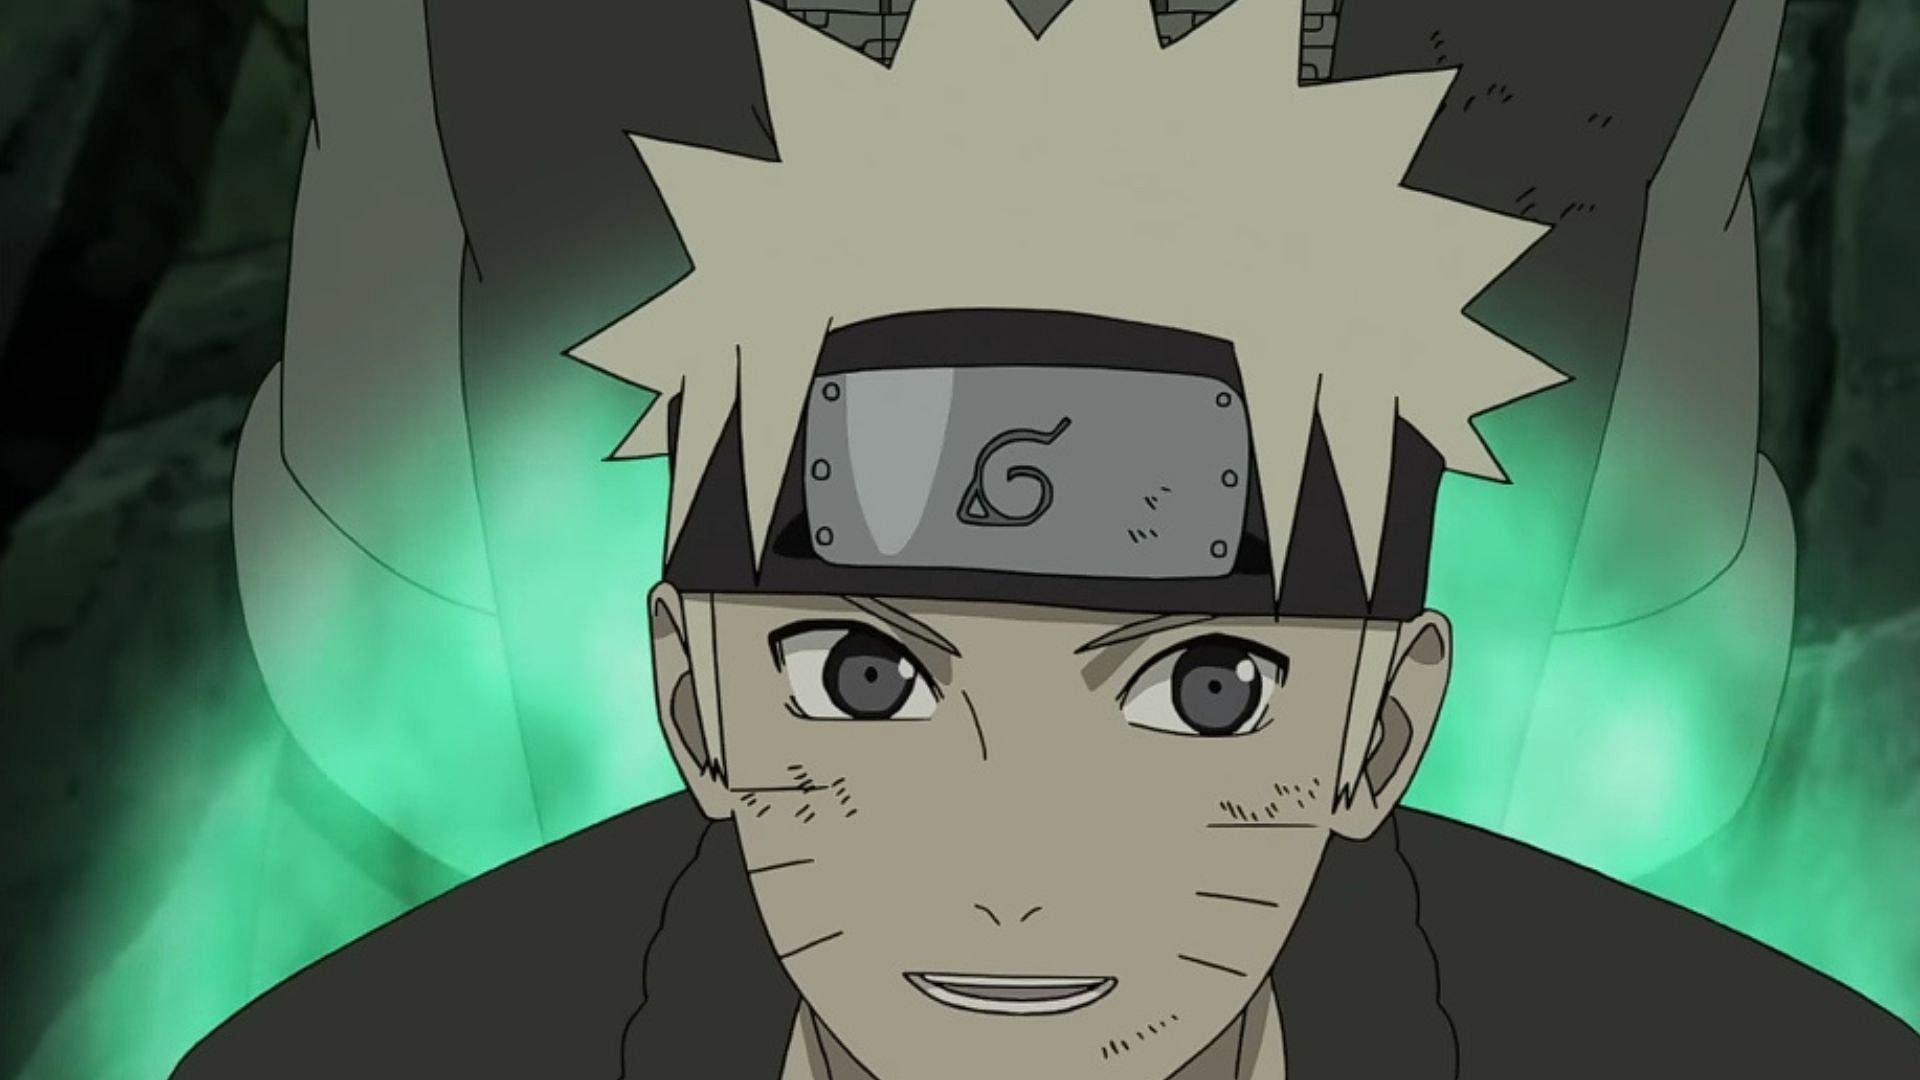 Naruto Uzumaki as seen in the anime Naruto (Image via Studio Pierrot)